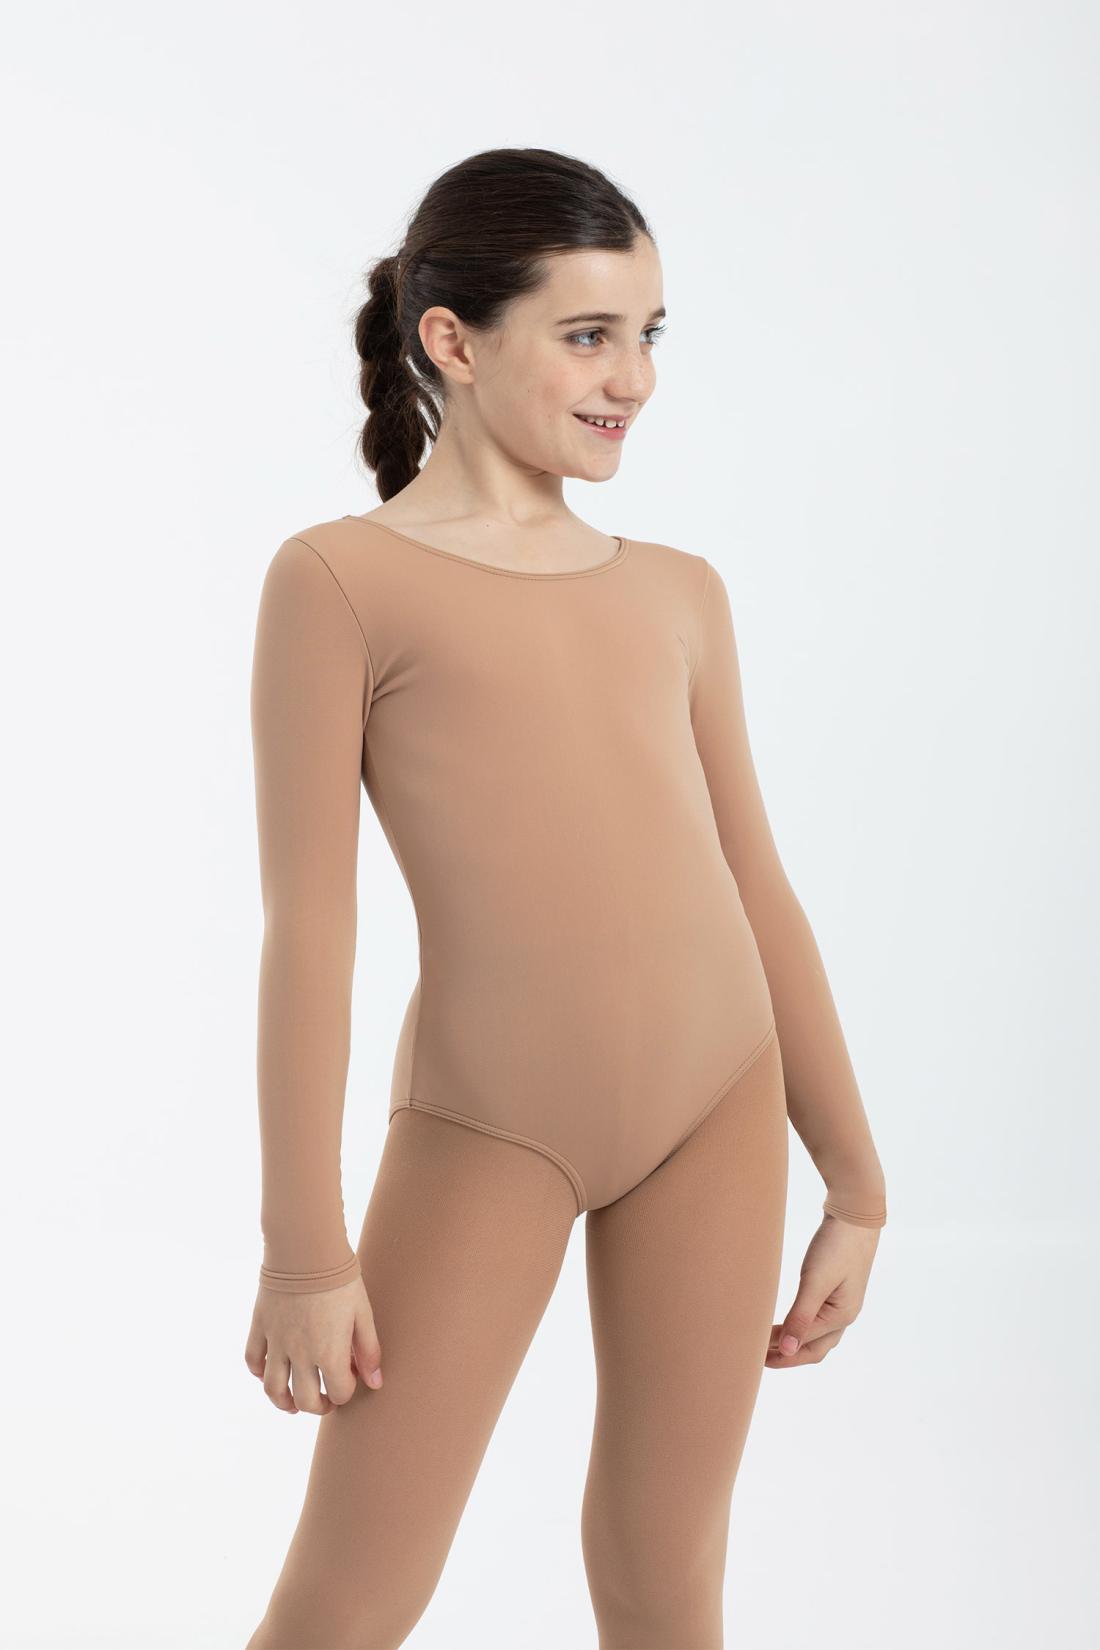 Long Sleeve Nude Underwear Leotard Intermezzo Figure Skating